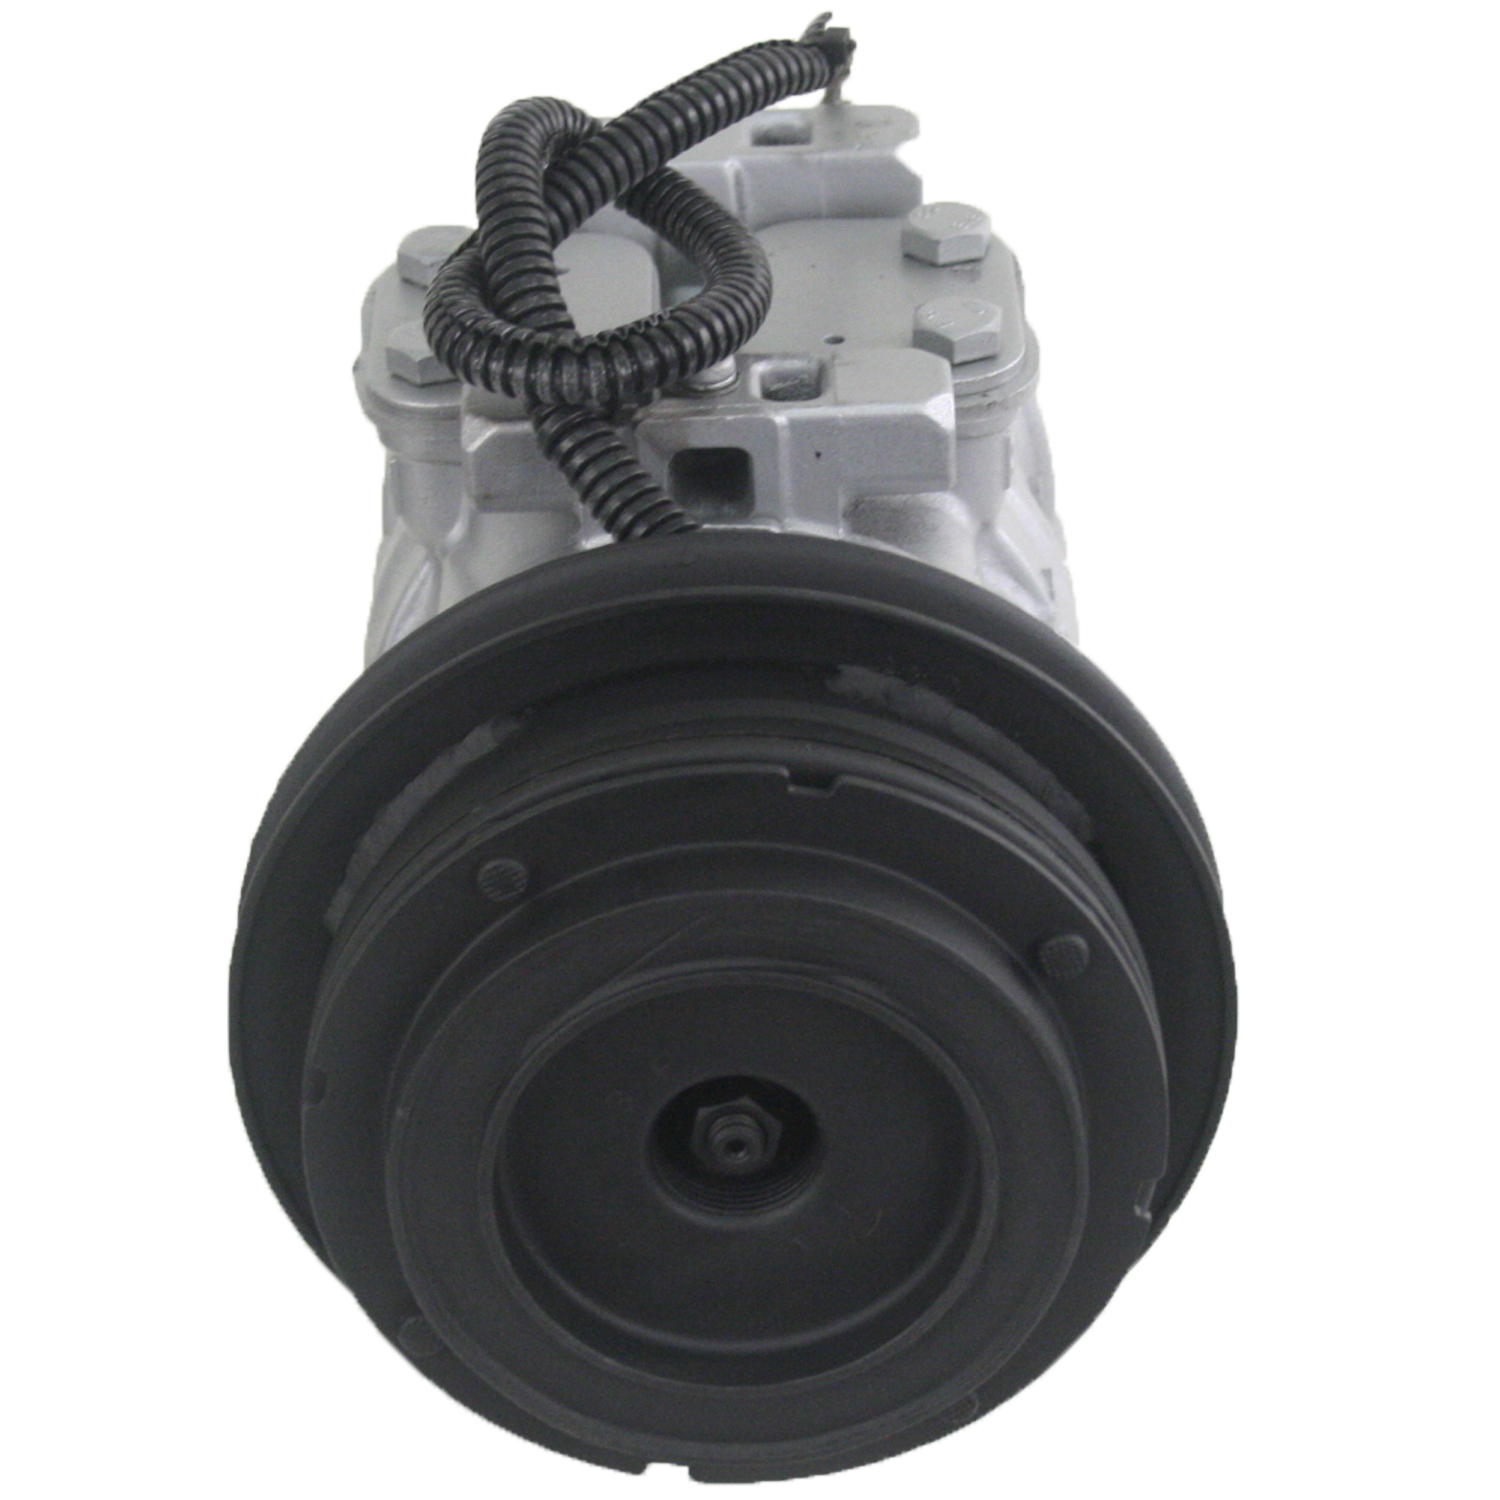 TCW Compressor 31100.108 Remanufactured Product Image field_60b6a13a6e67c